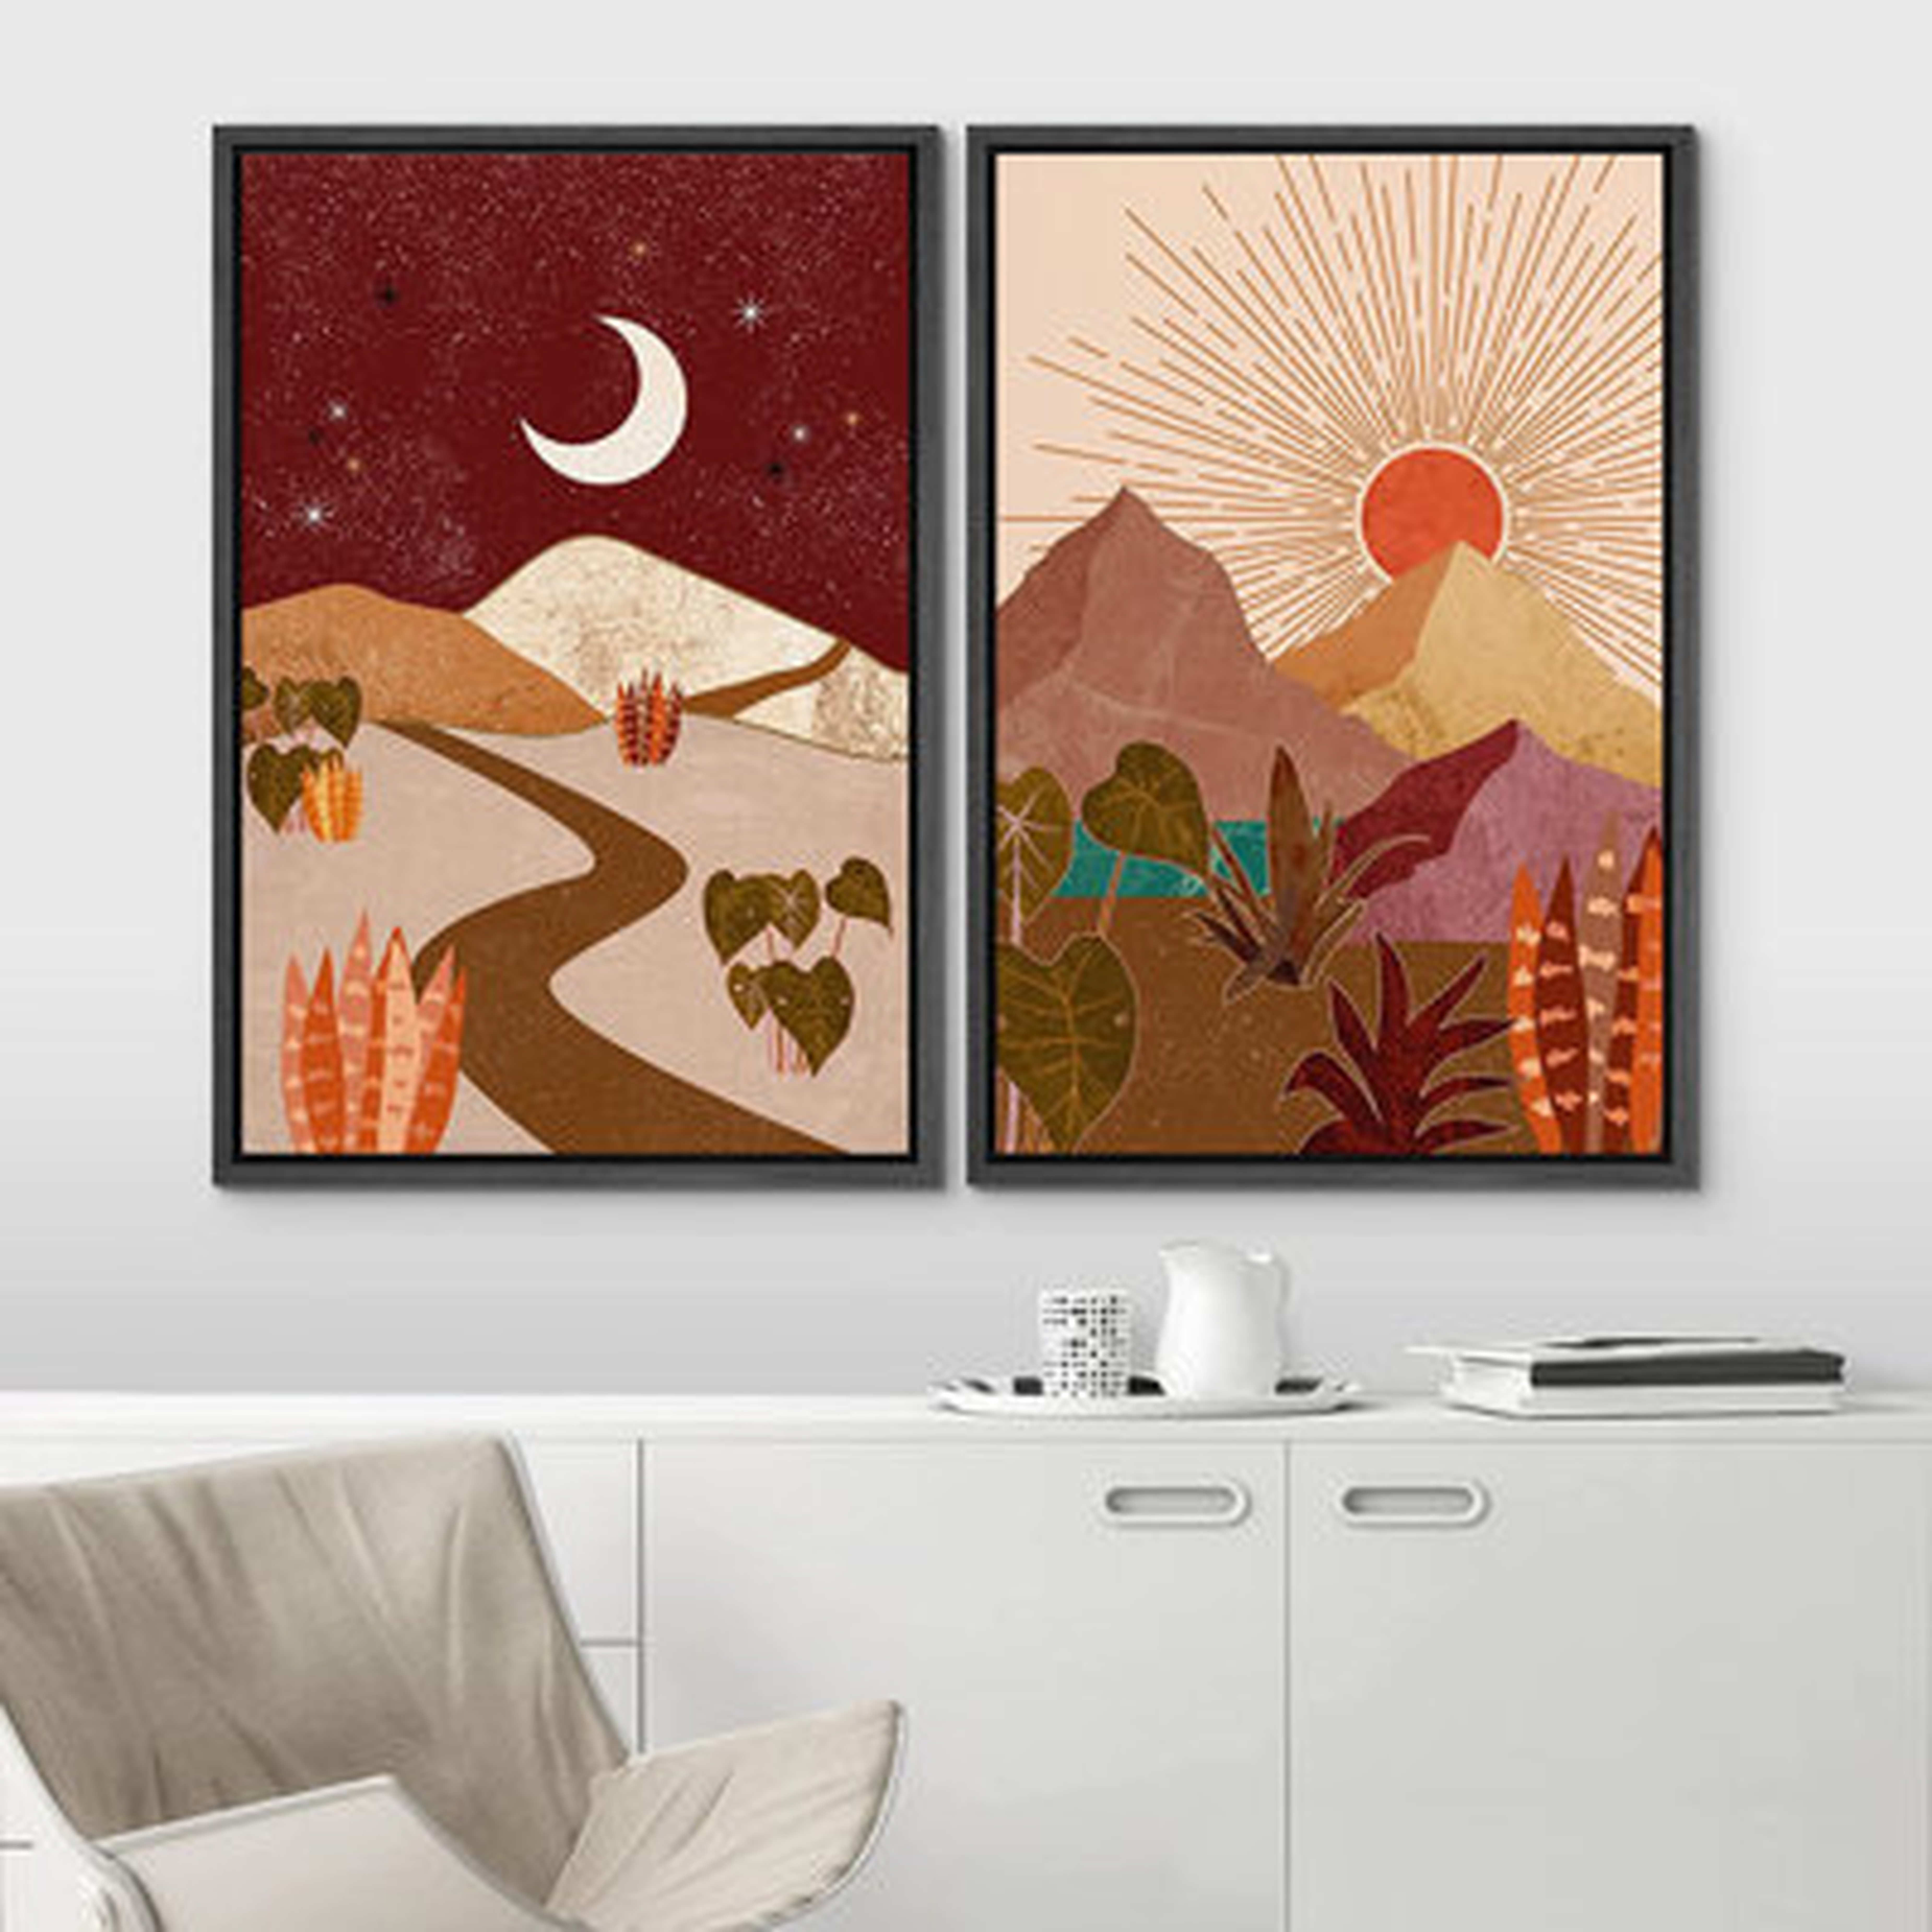 IDEA4WALL Framed Canvas Print Wall Art Set Moon & Sun Desert Southwest Landscapes Nature Wilderness Illustrations Modern Art Rustic Decorative For Living Room, Bedroom, Officel - 16"X24"X2 White - Wayfair